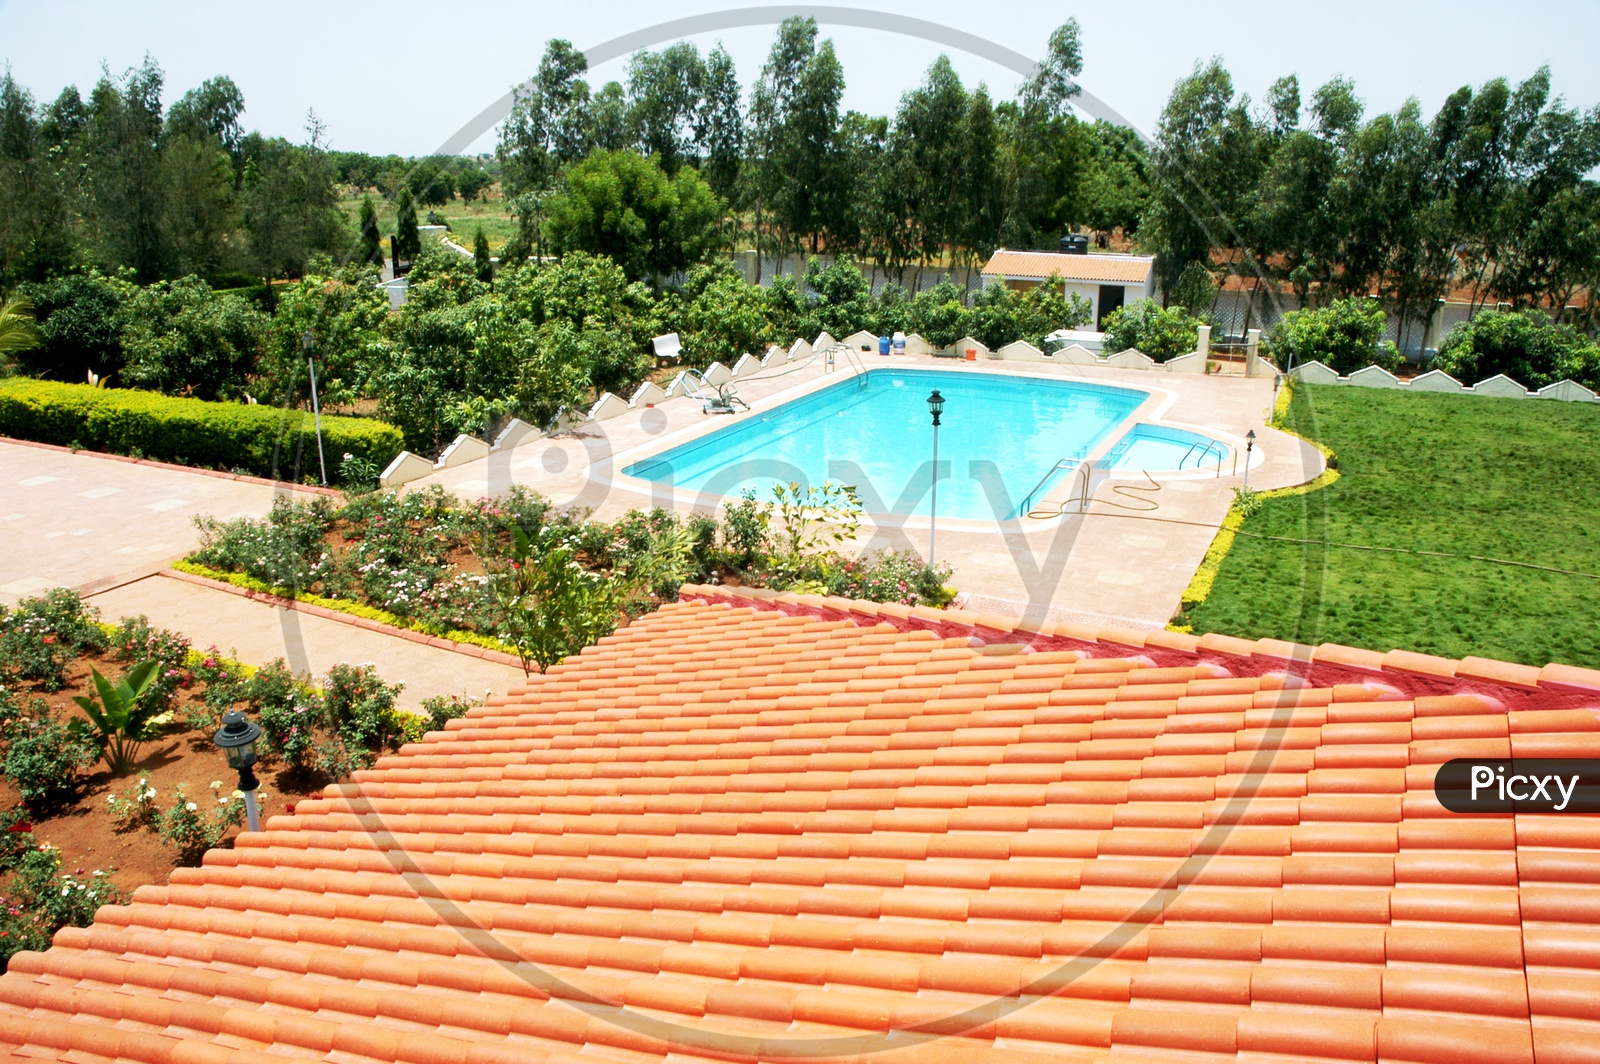 Swimming pool in a villa